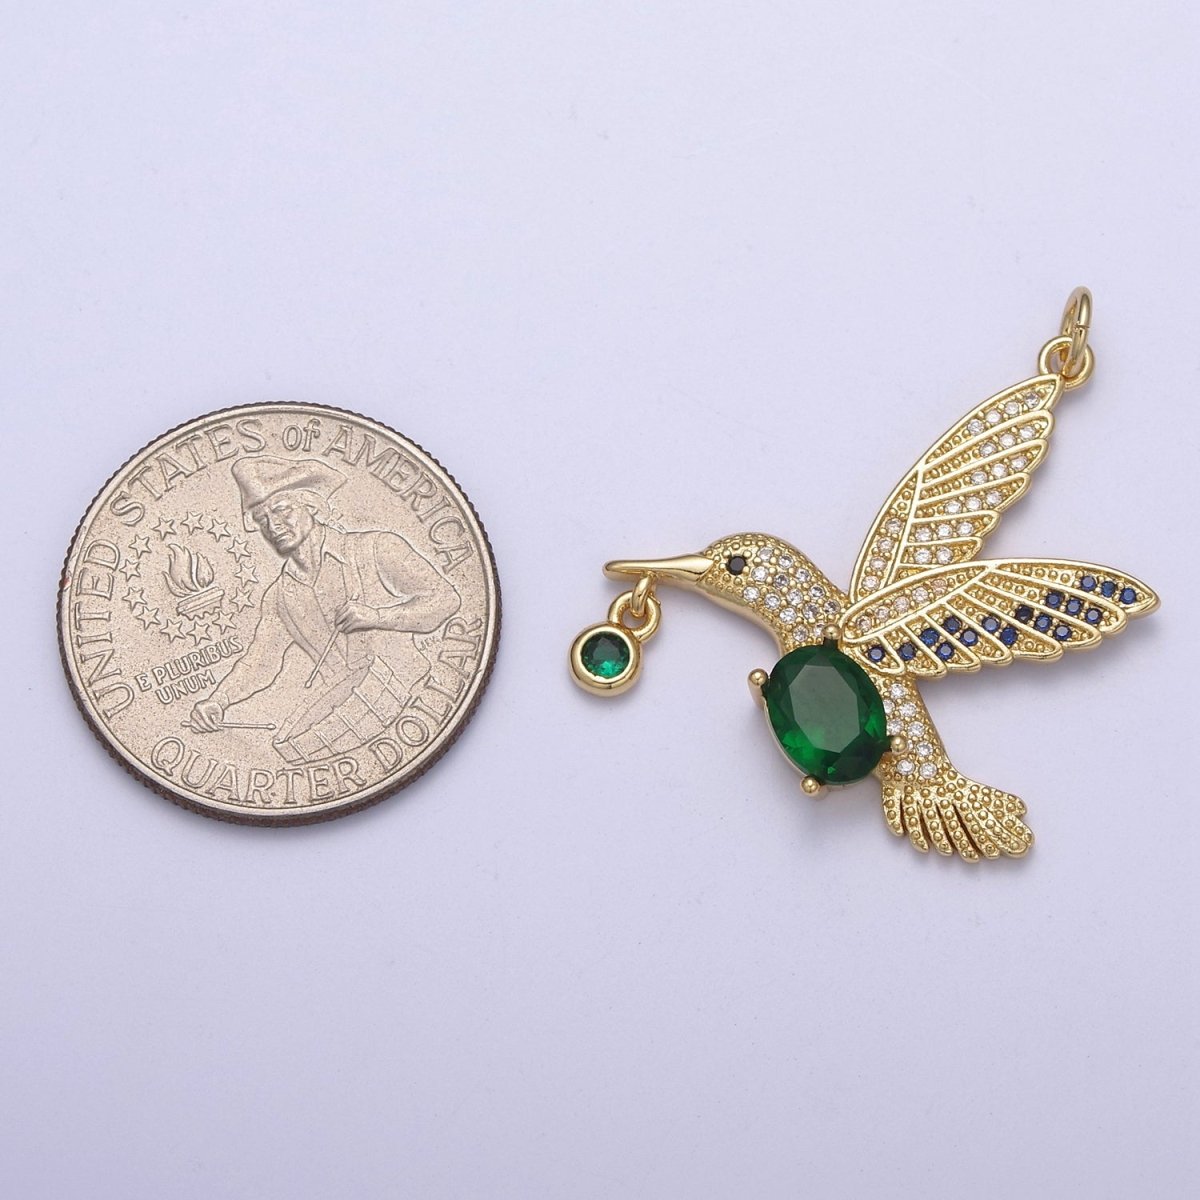 Gold Hummingbird Charm 24k Gold Filled Humming Bird Pendant 36mmx28.1mm gold Green Cz Animal jewelry C-308 - DLUXCA